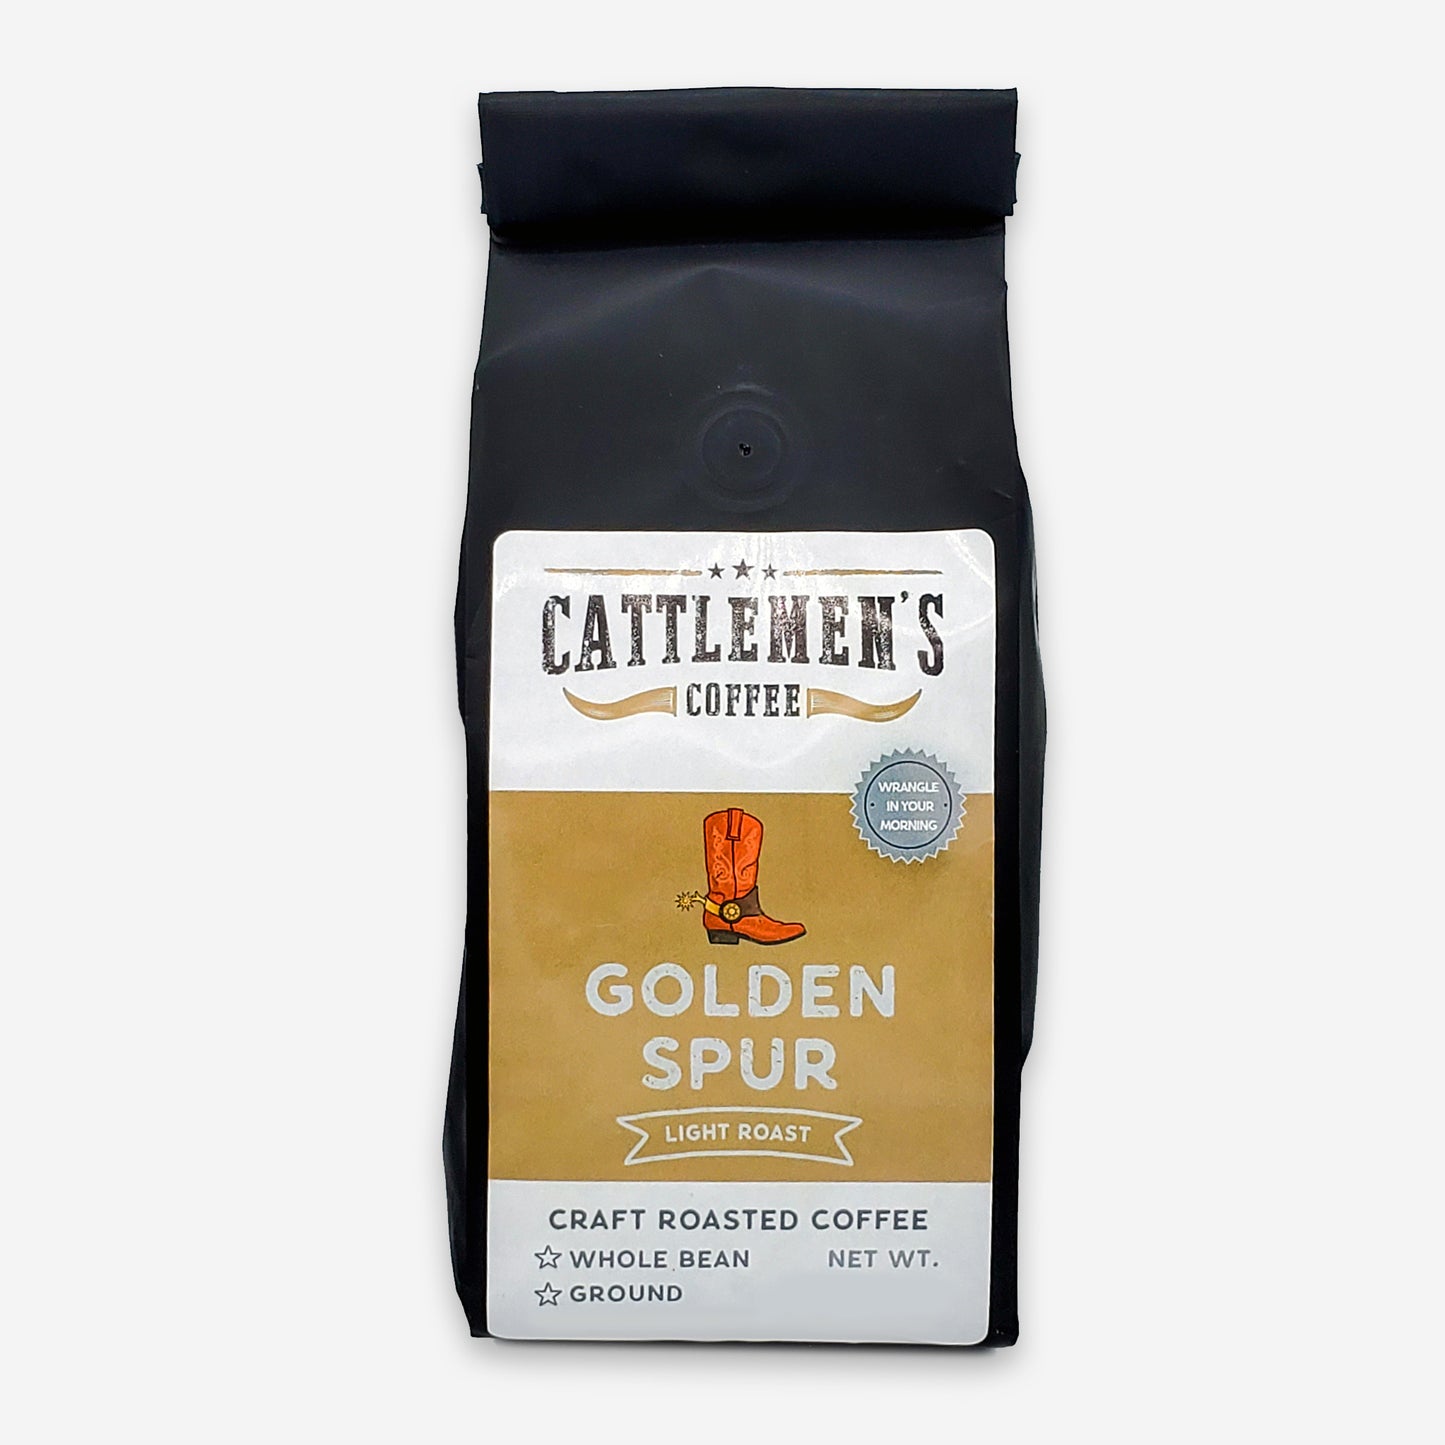 Golden Spur Coffee by Cattlemen's